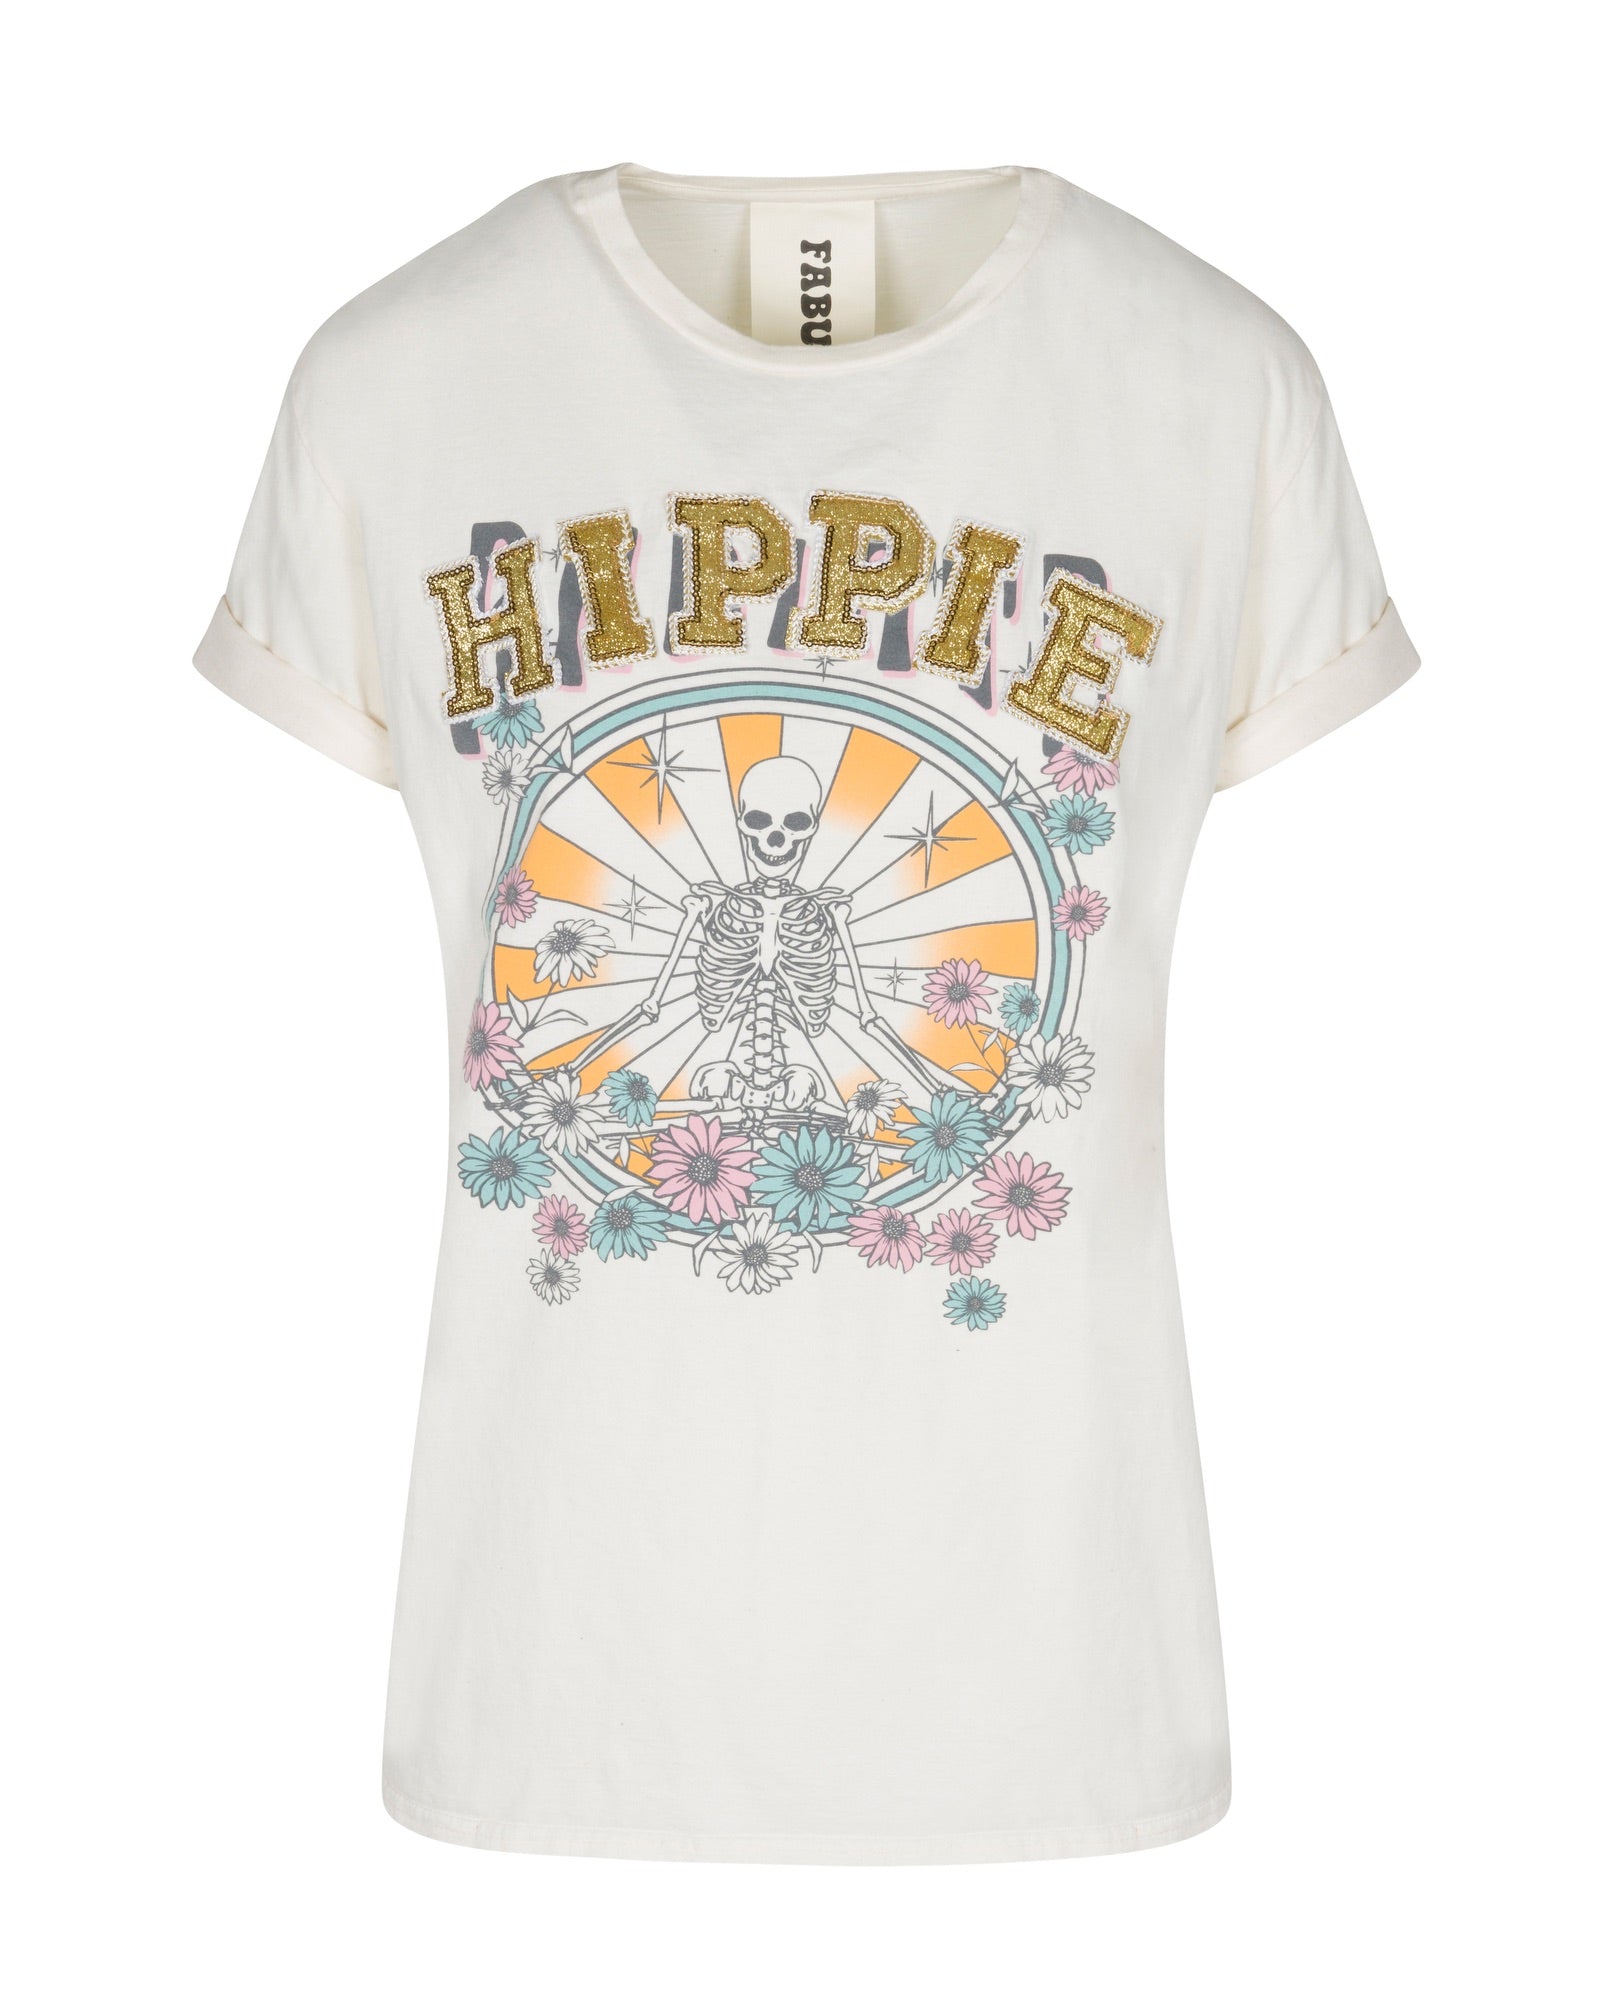 Meghan Fabulous Women's White Hippie Vintage T-shirt